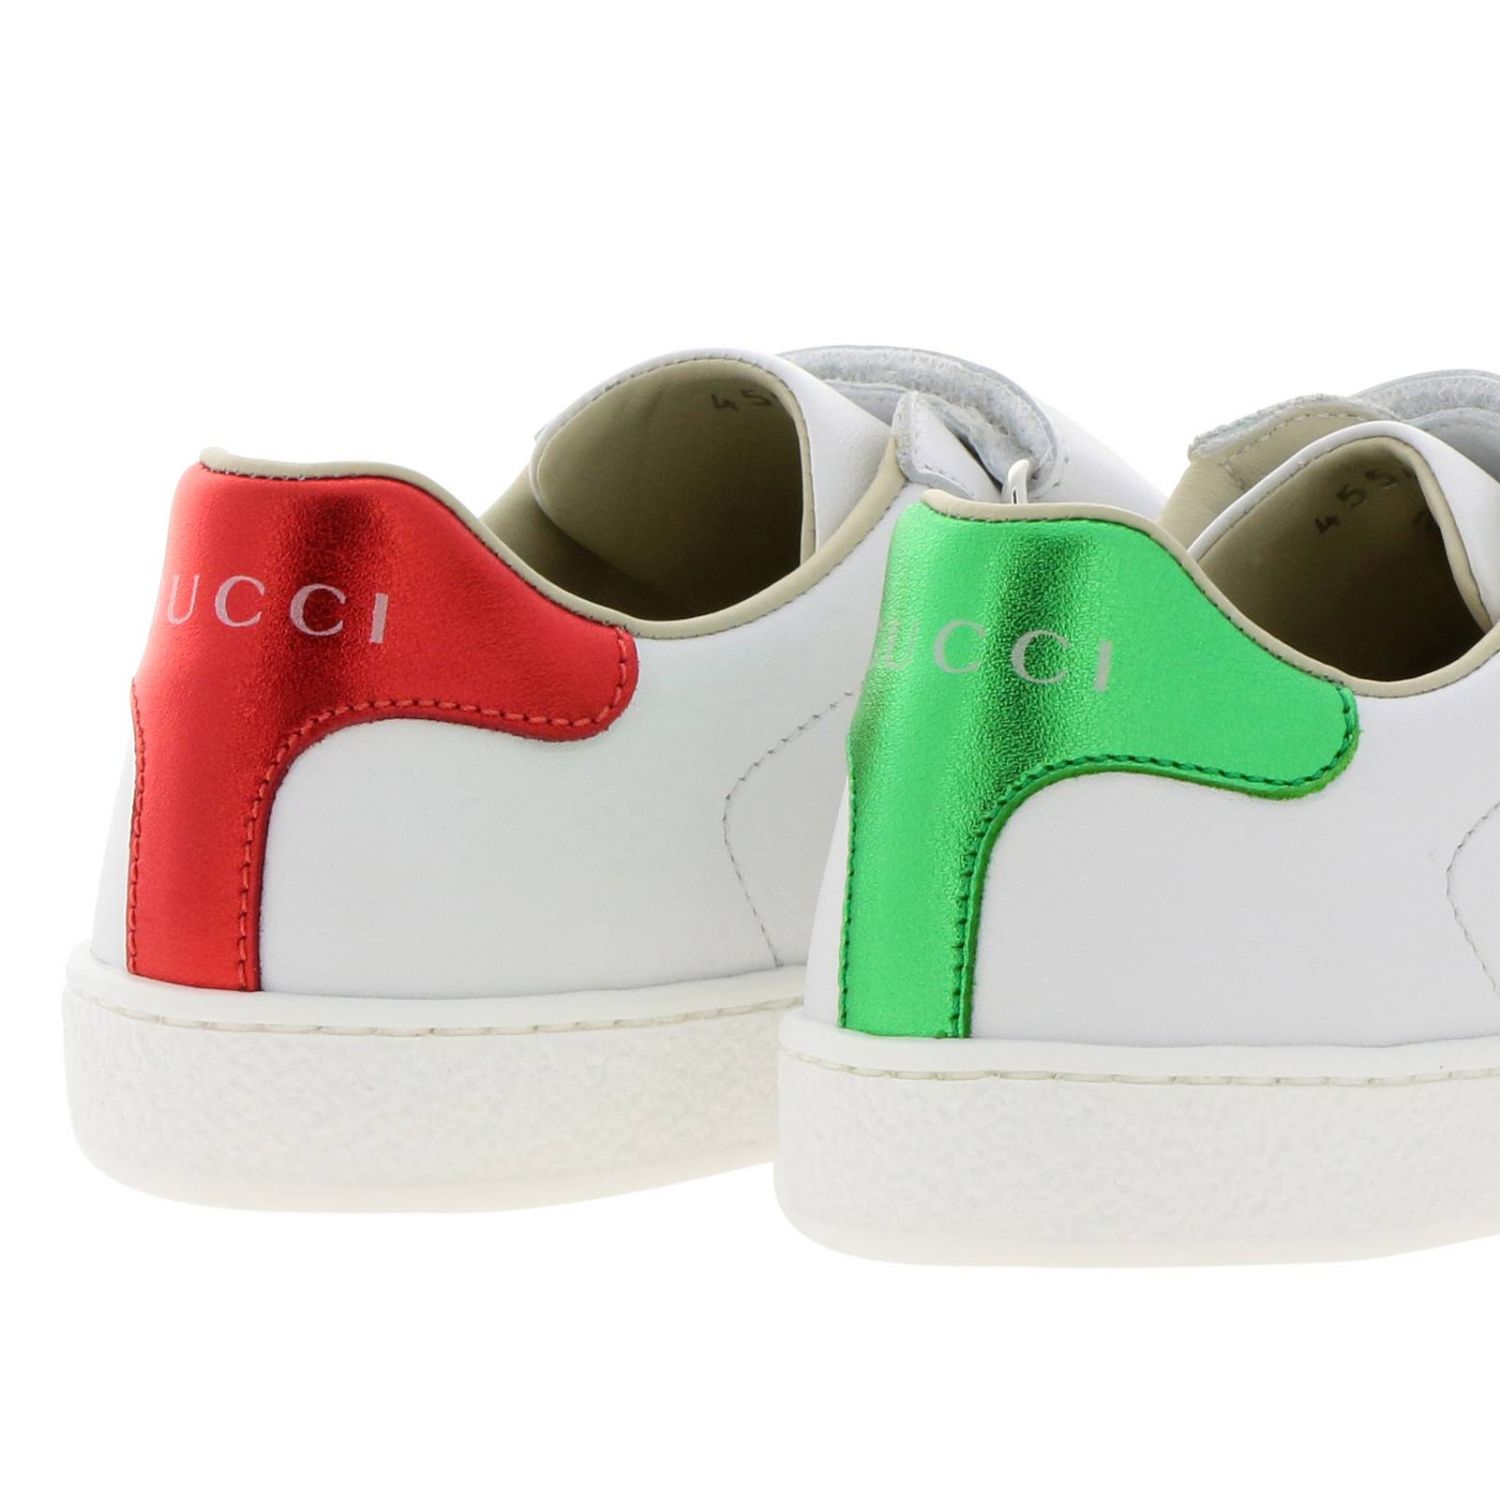 GUCCI: Shoes kids | Shoes Gucci Kids White | Shoes Gucci 455448 CPWP0 ...